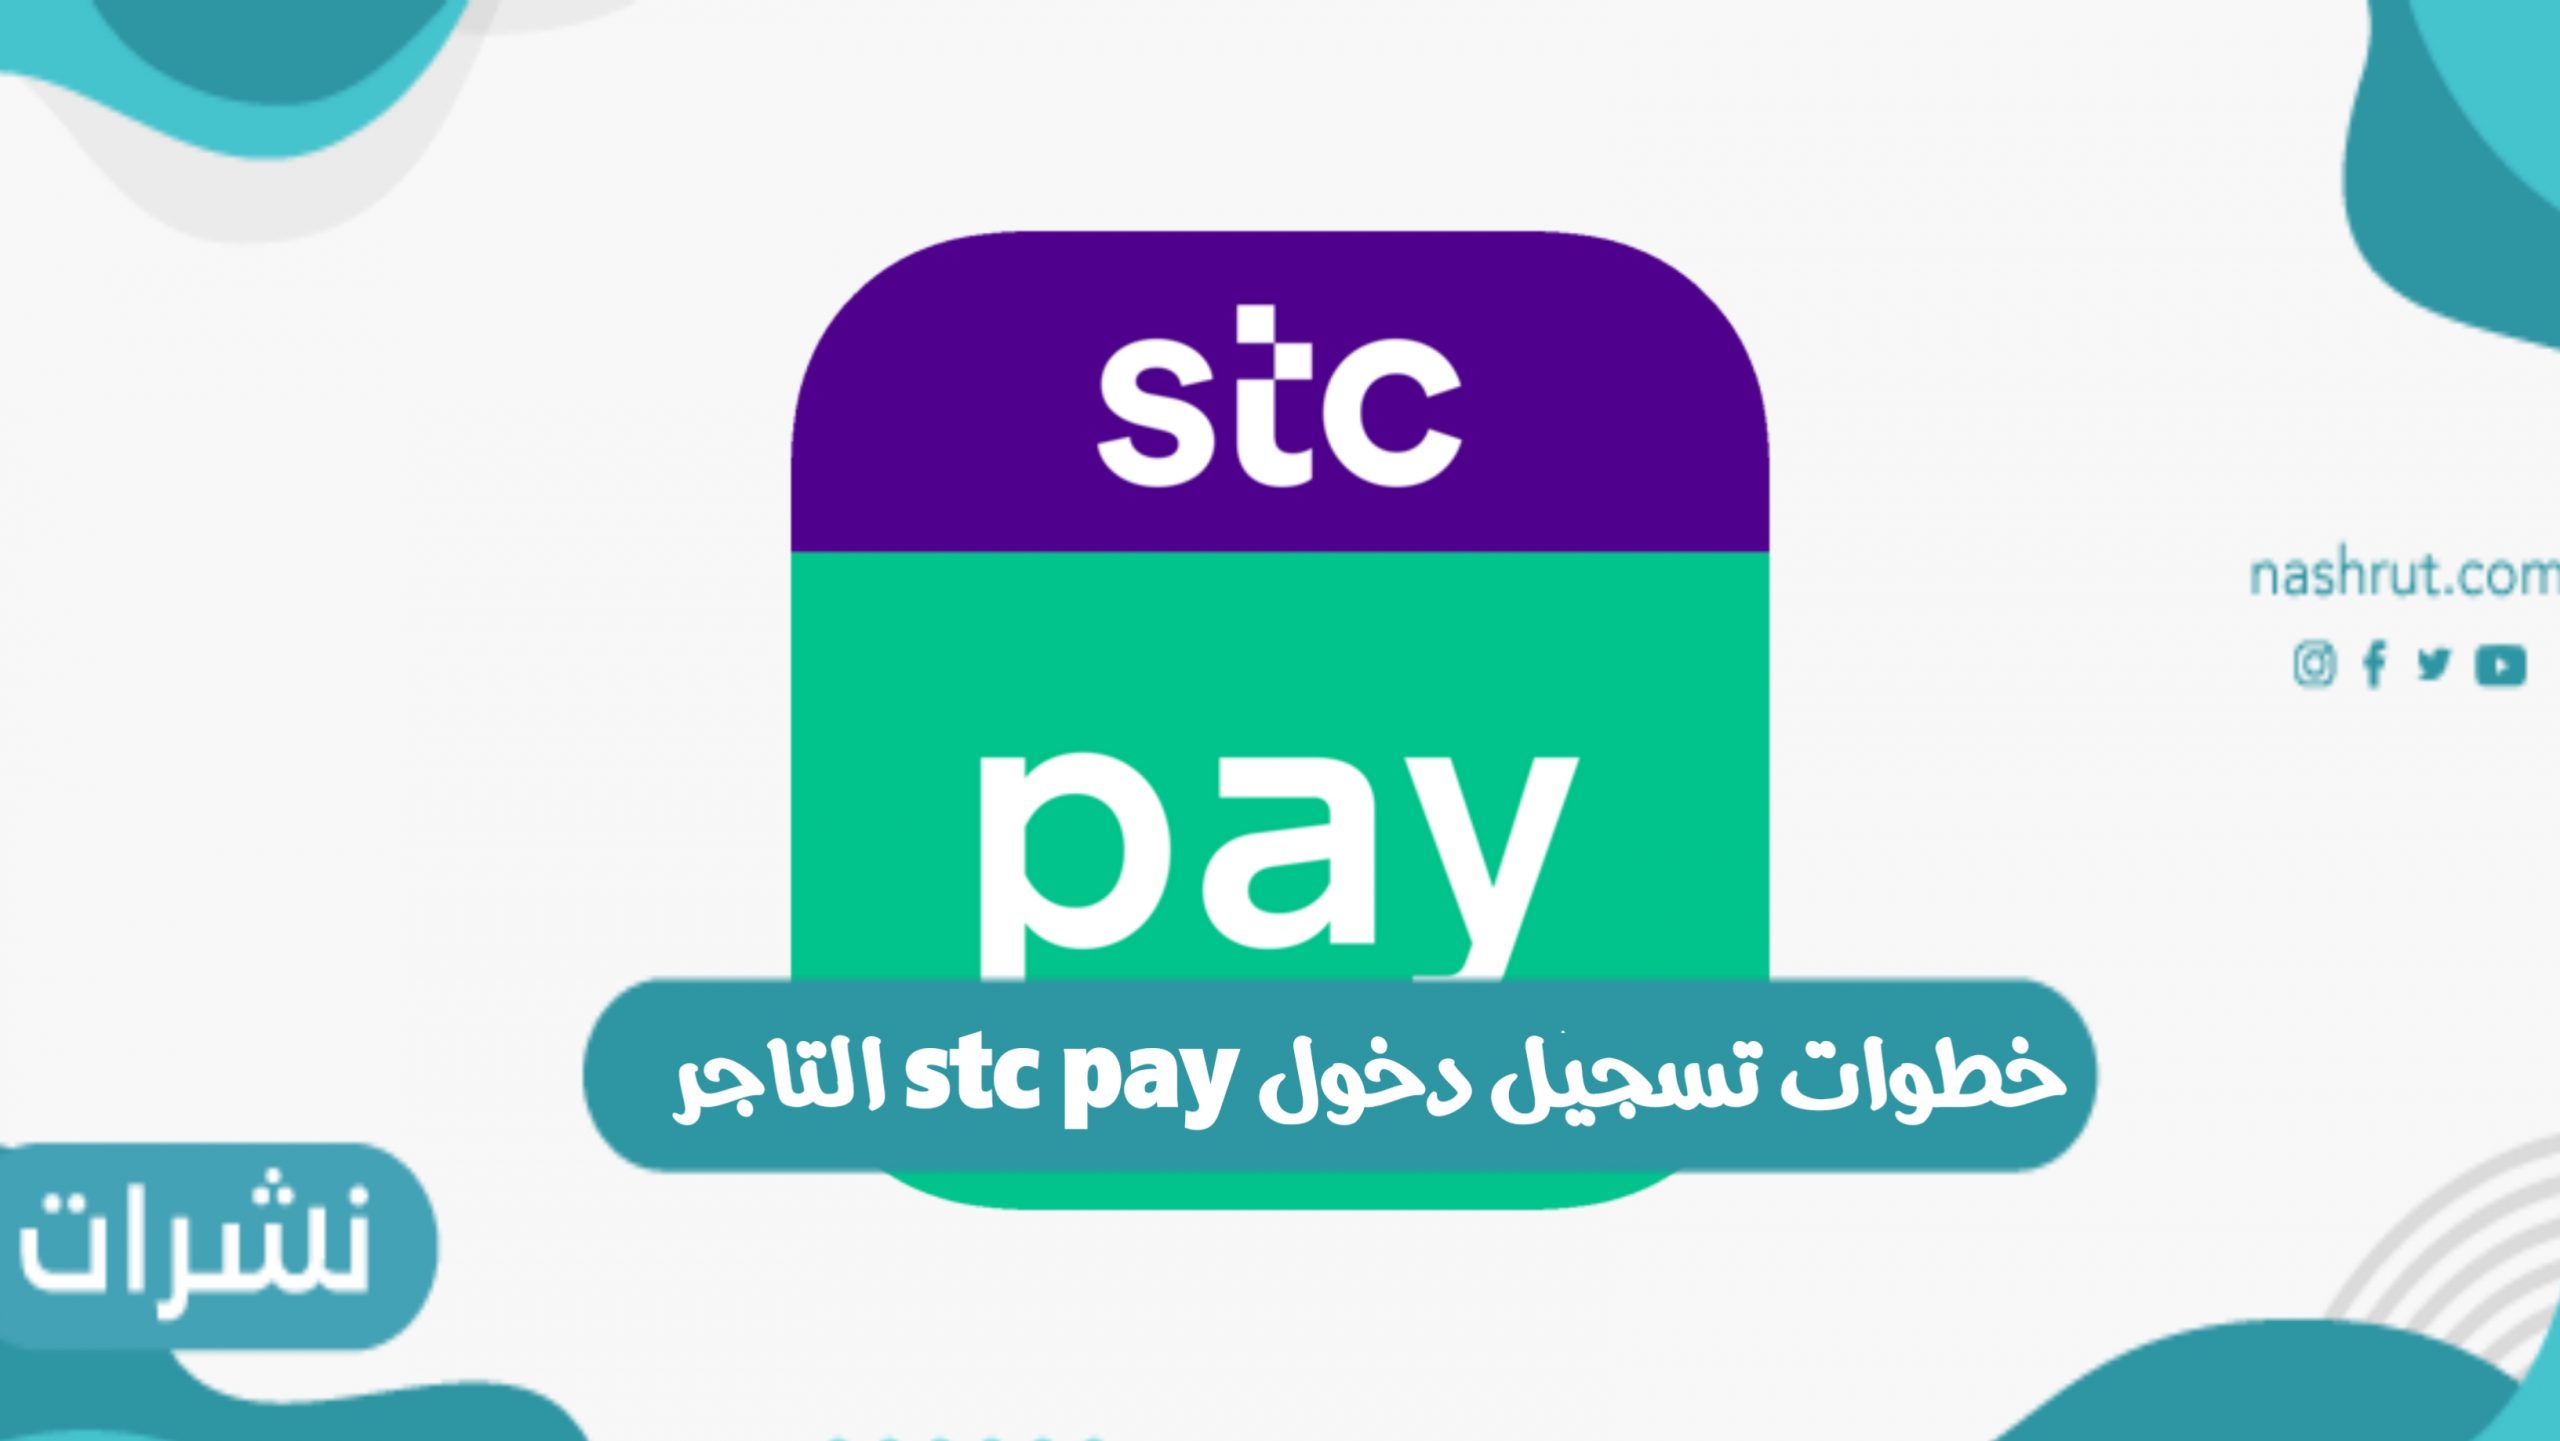 Stc التاجر دخول تسجيل pay كيفية تسجيل